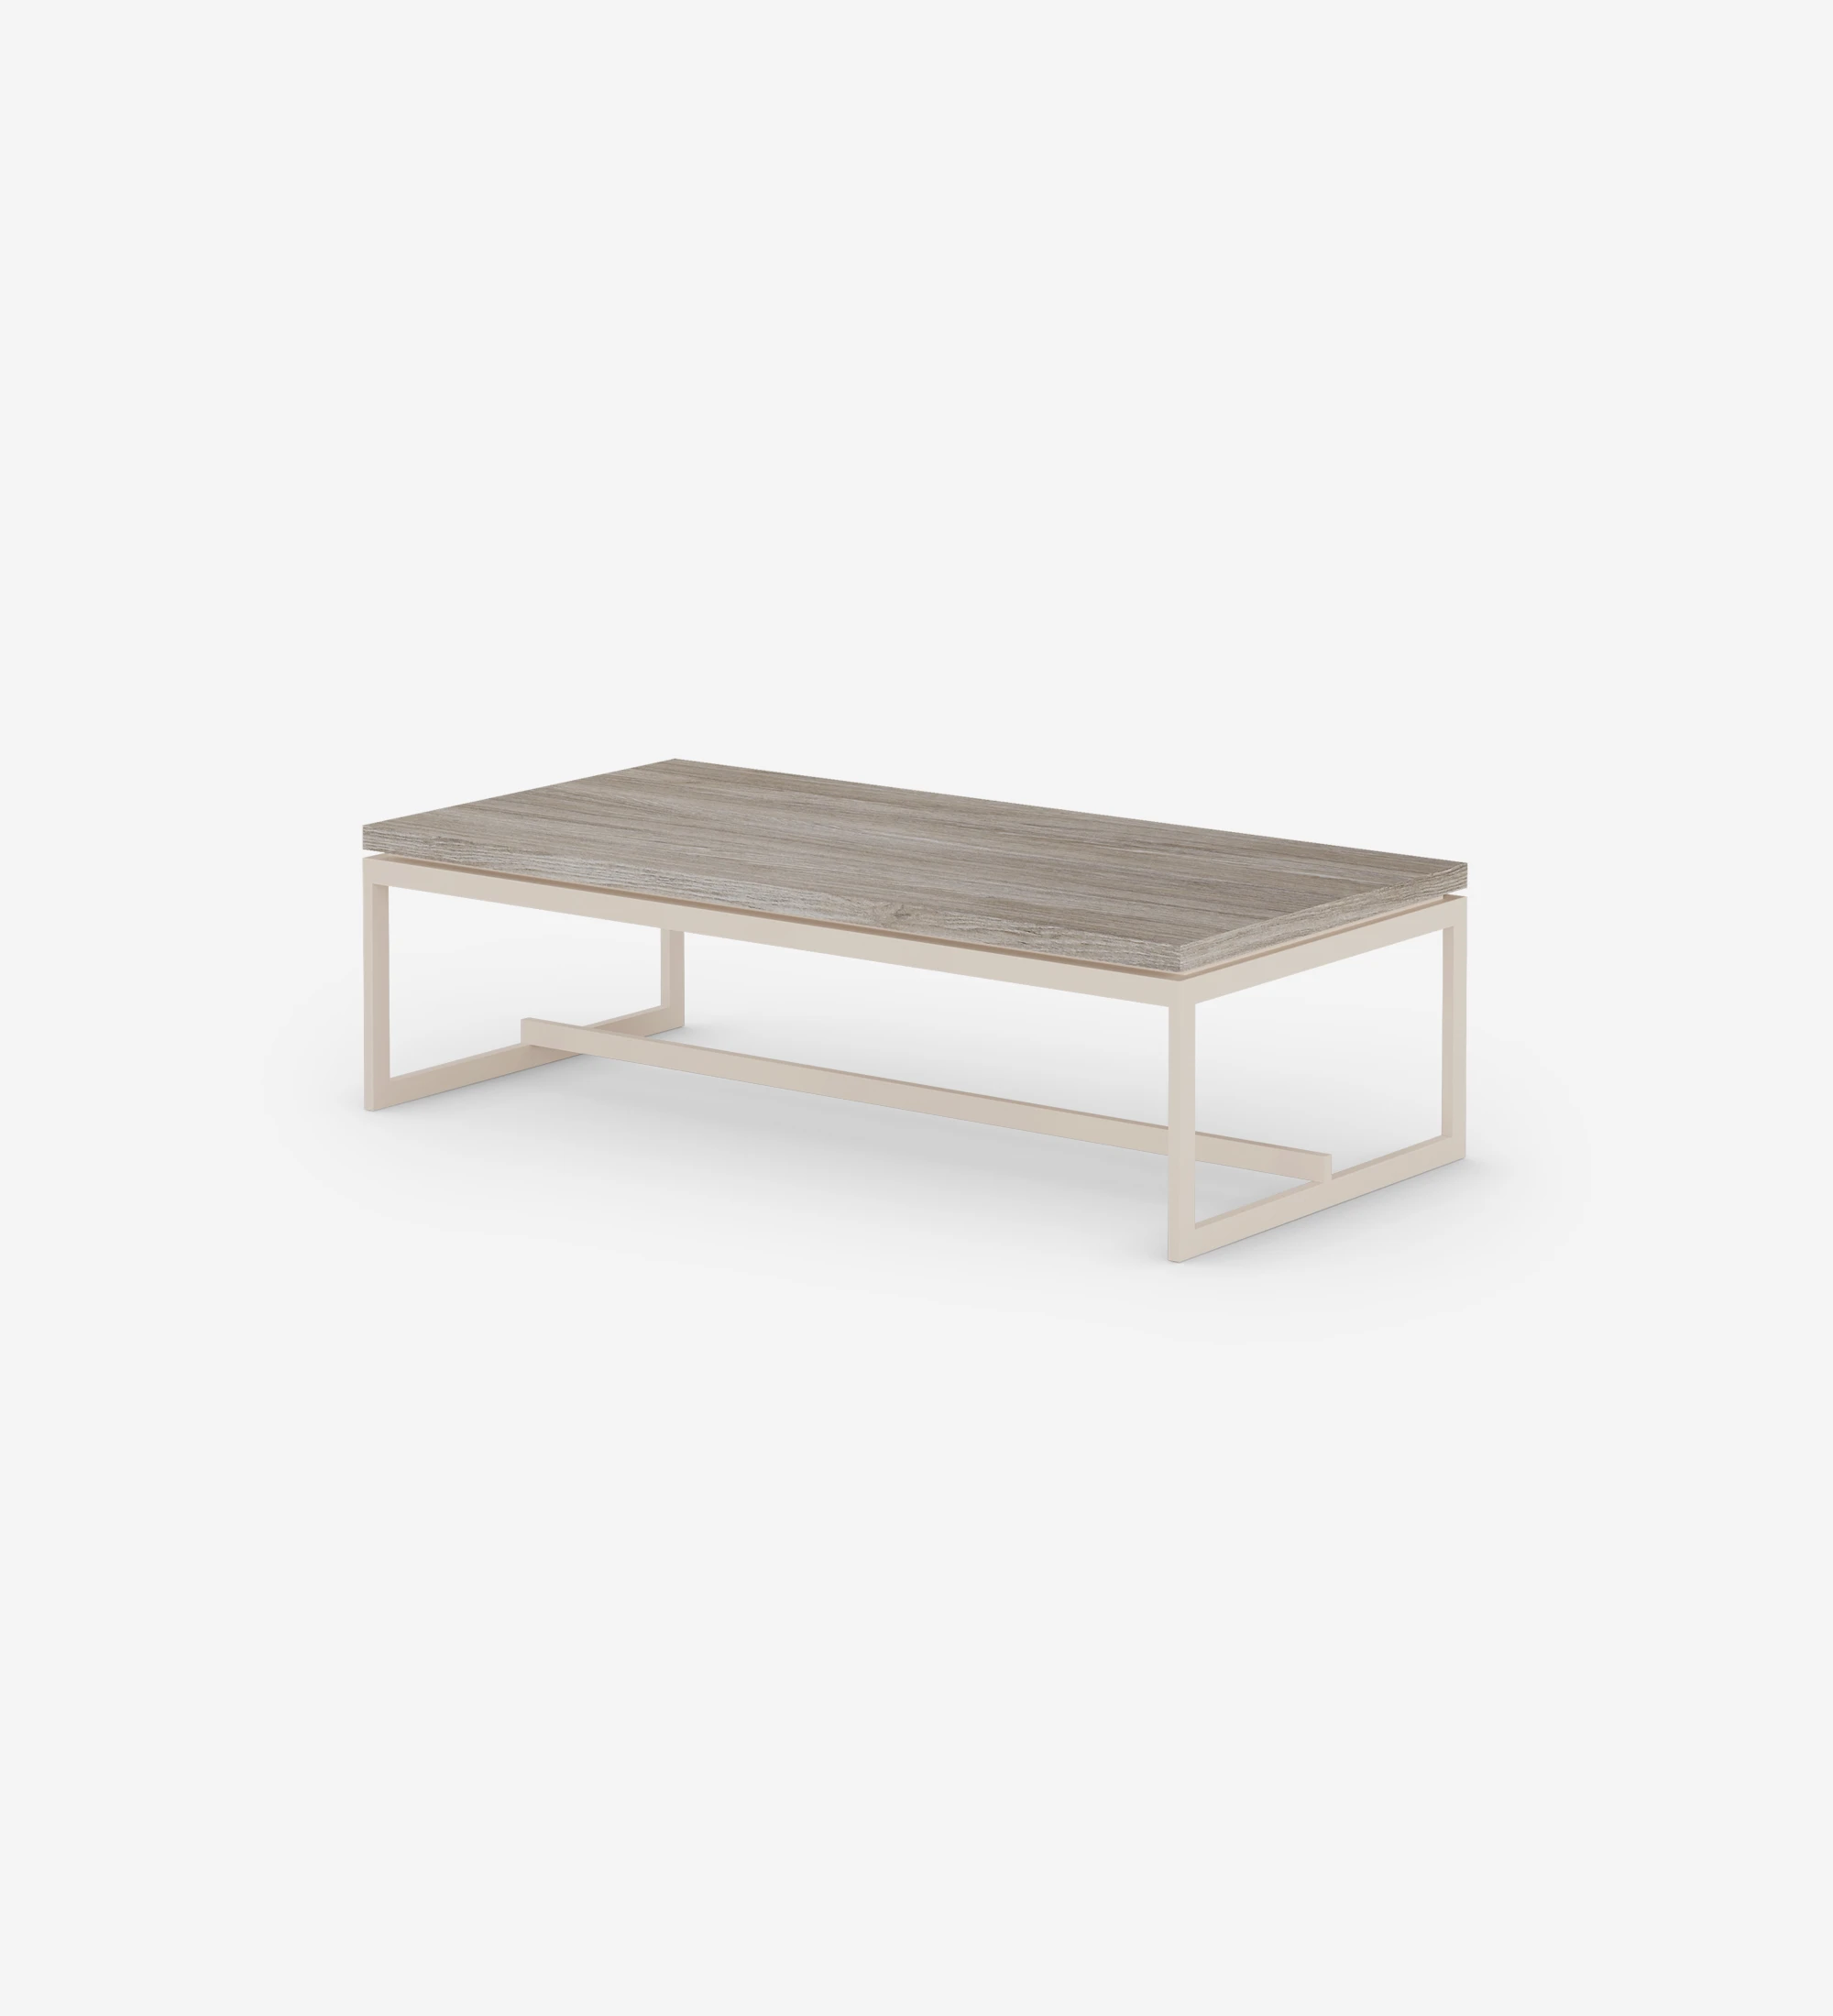 Chicago rectangular center table, decapé oak top, pearl lacquered metal feet, 120 x 60 cm.